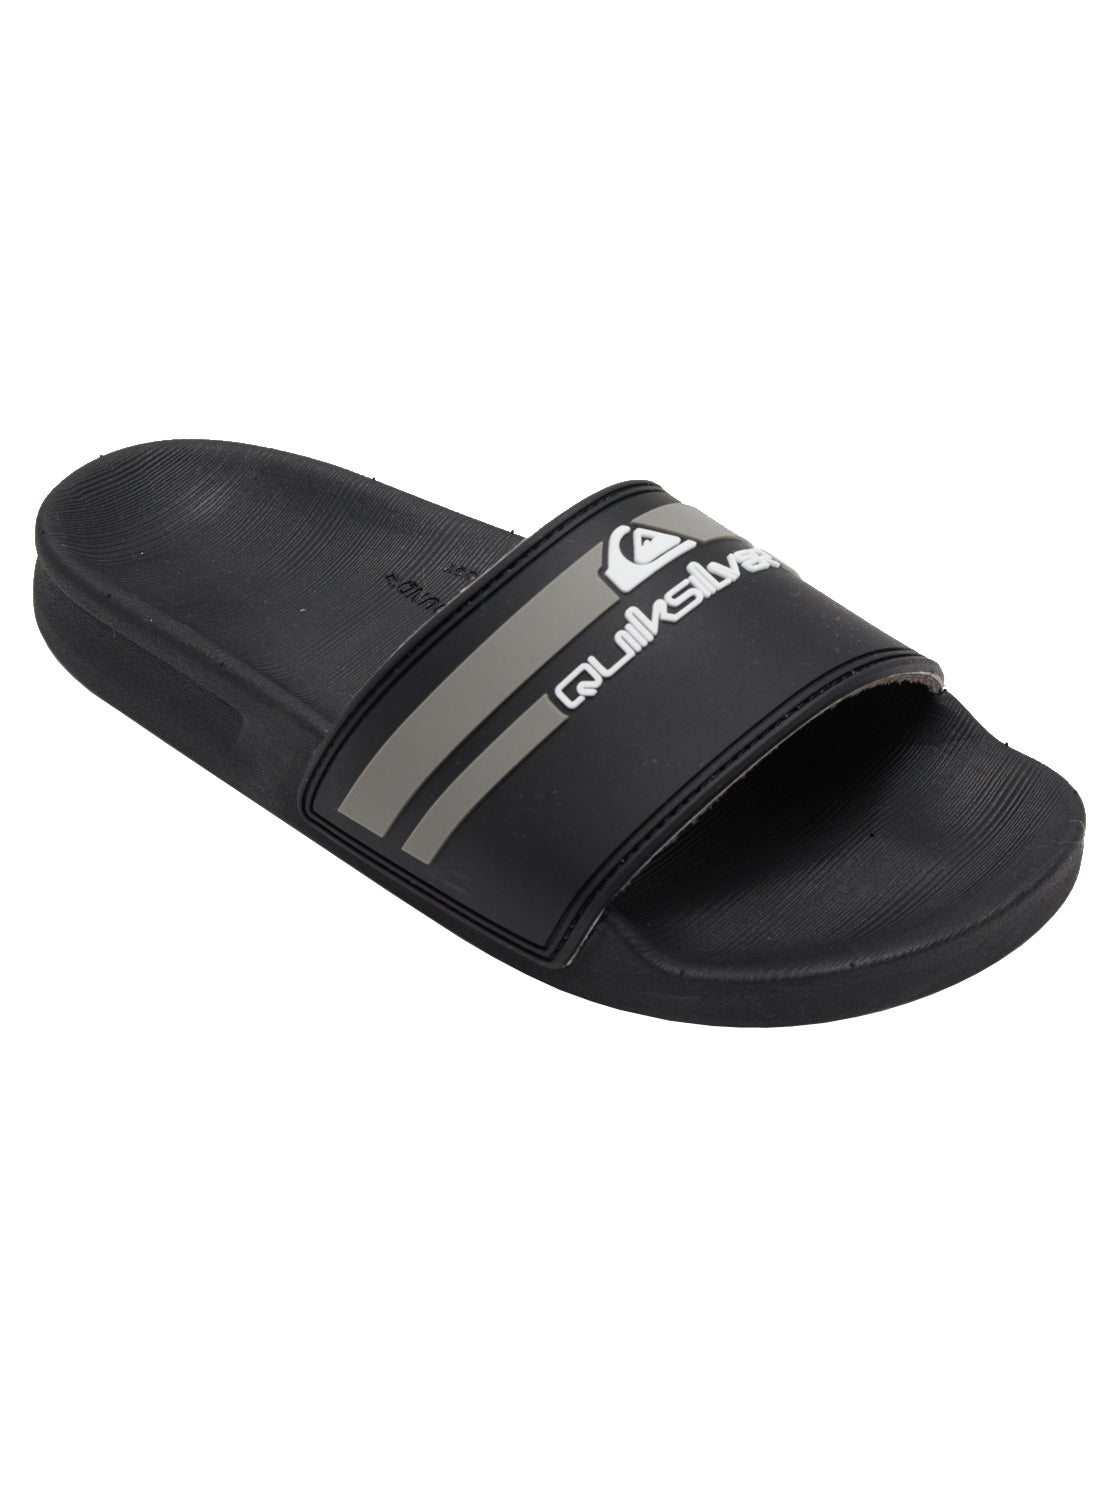 Quiksilver Rivi Slide Youth Sandal XKSK-Black-Grey-Black 10 C